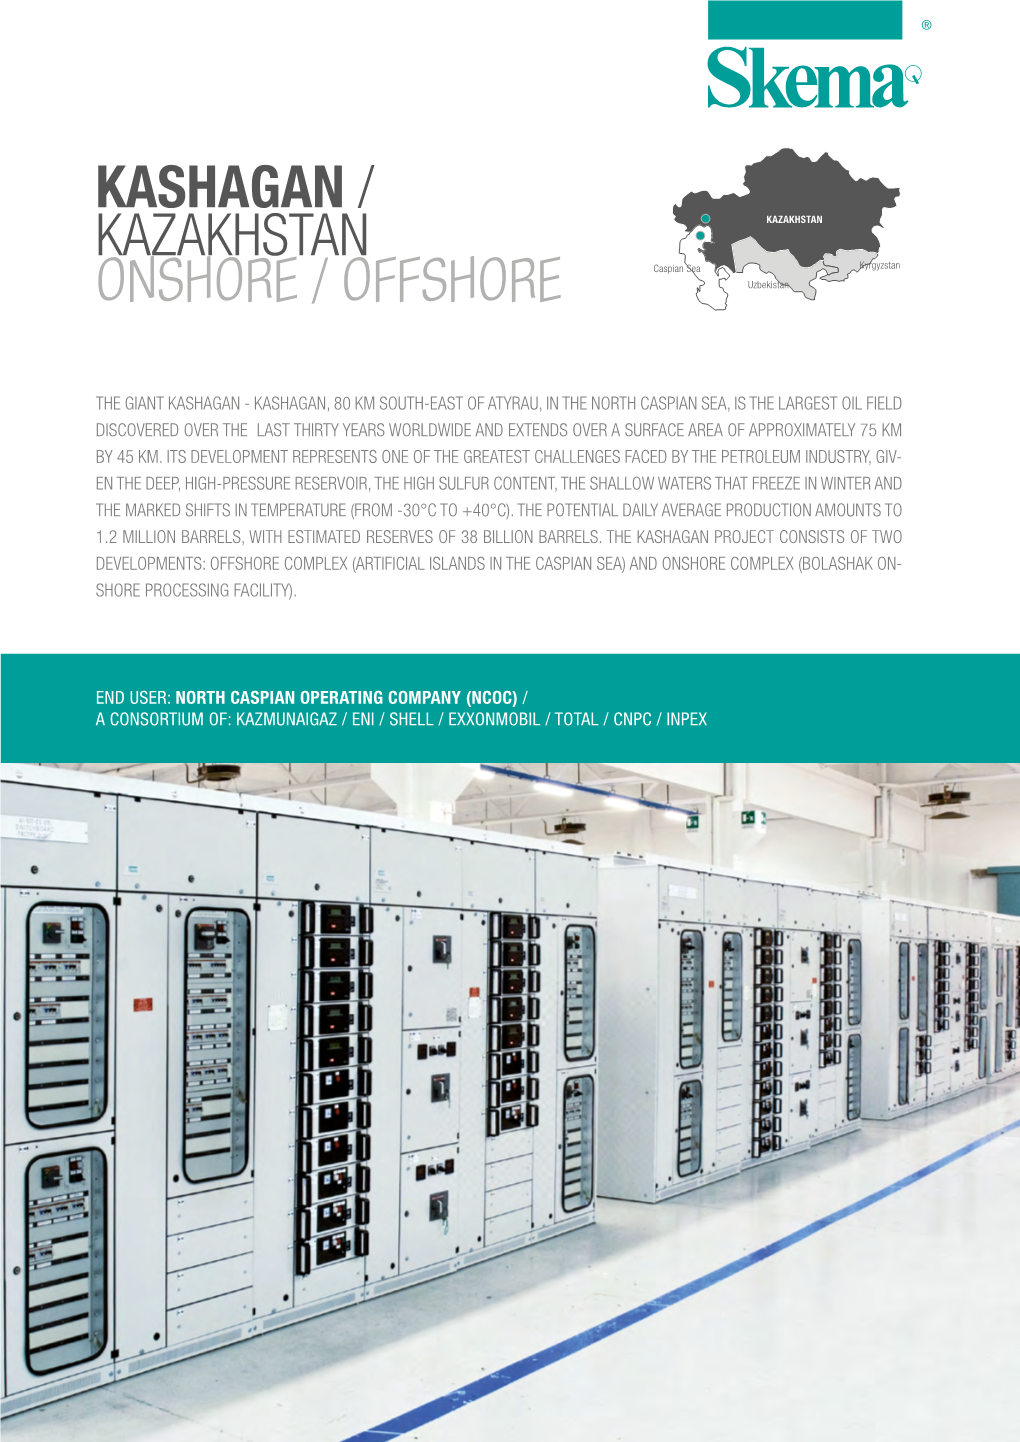 Kashagan / Kazakhstan Onshore / Offshore